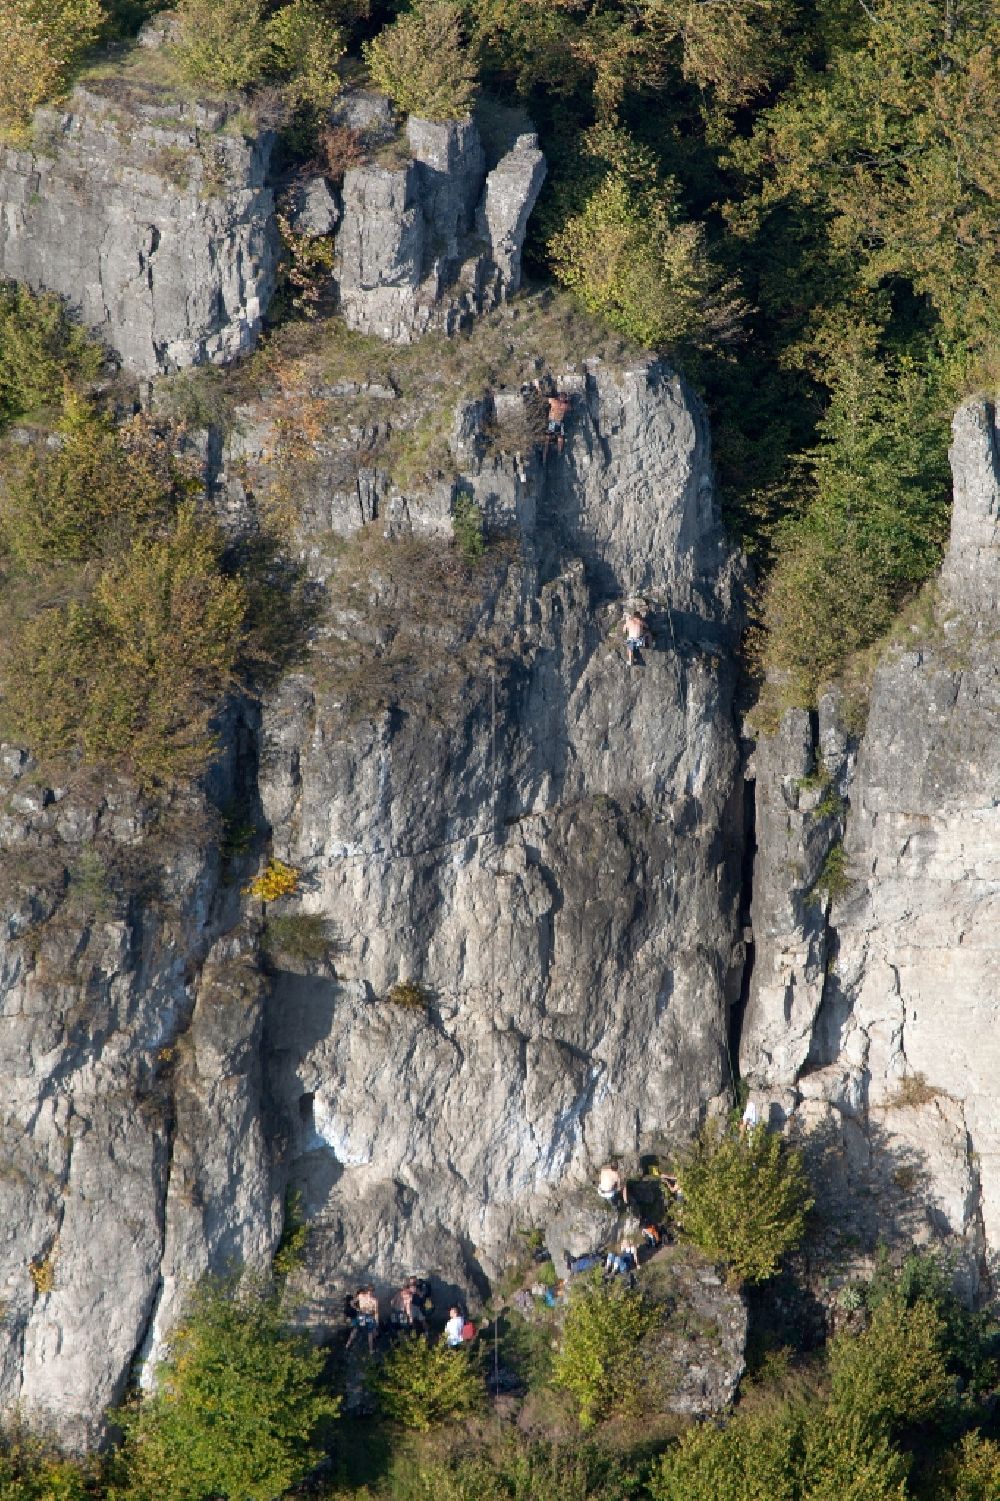 Gerolstein from the bird's eye view: View of dolomite cliffs near Gerolstein in the state of Rhineland-Palatinate